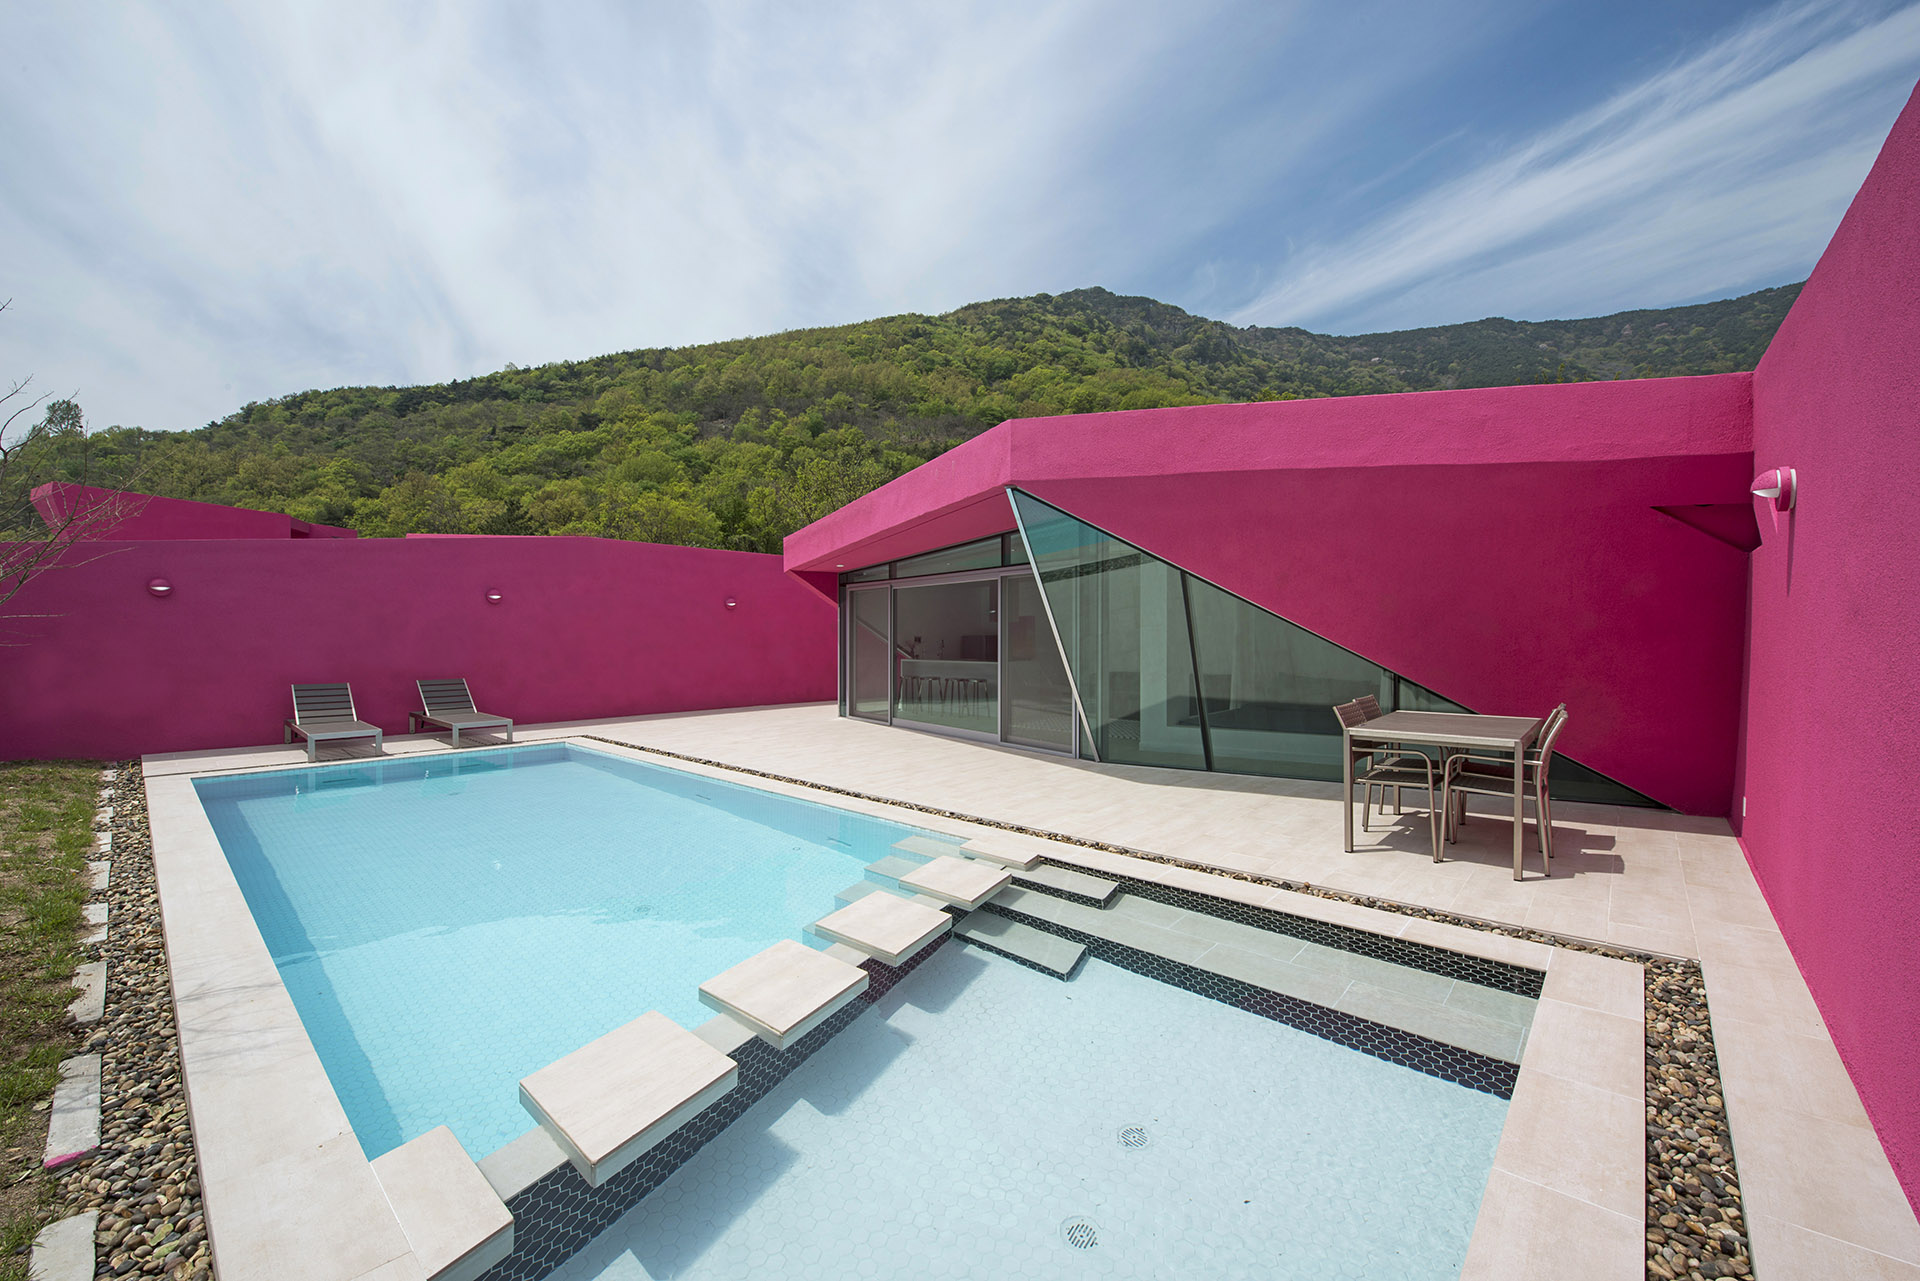 Rose-toned villa among verdant hills. Walls frame the spectacular view